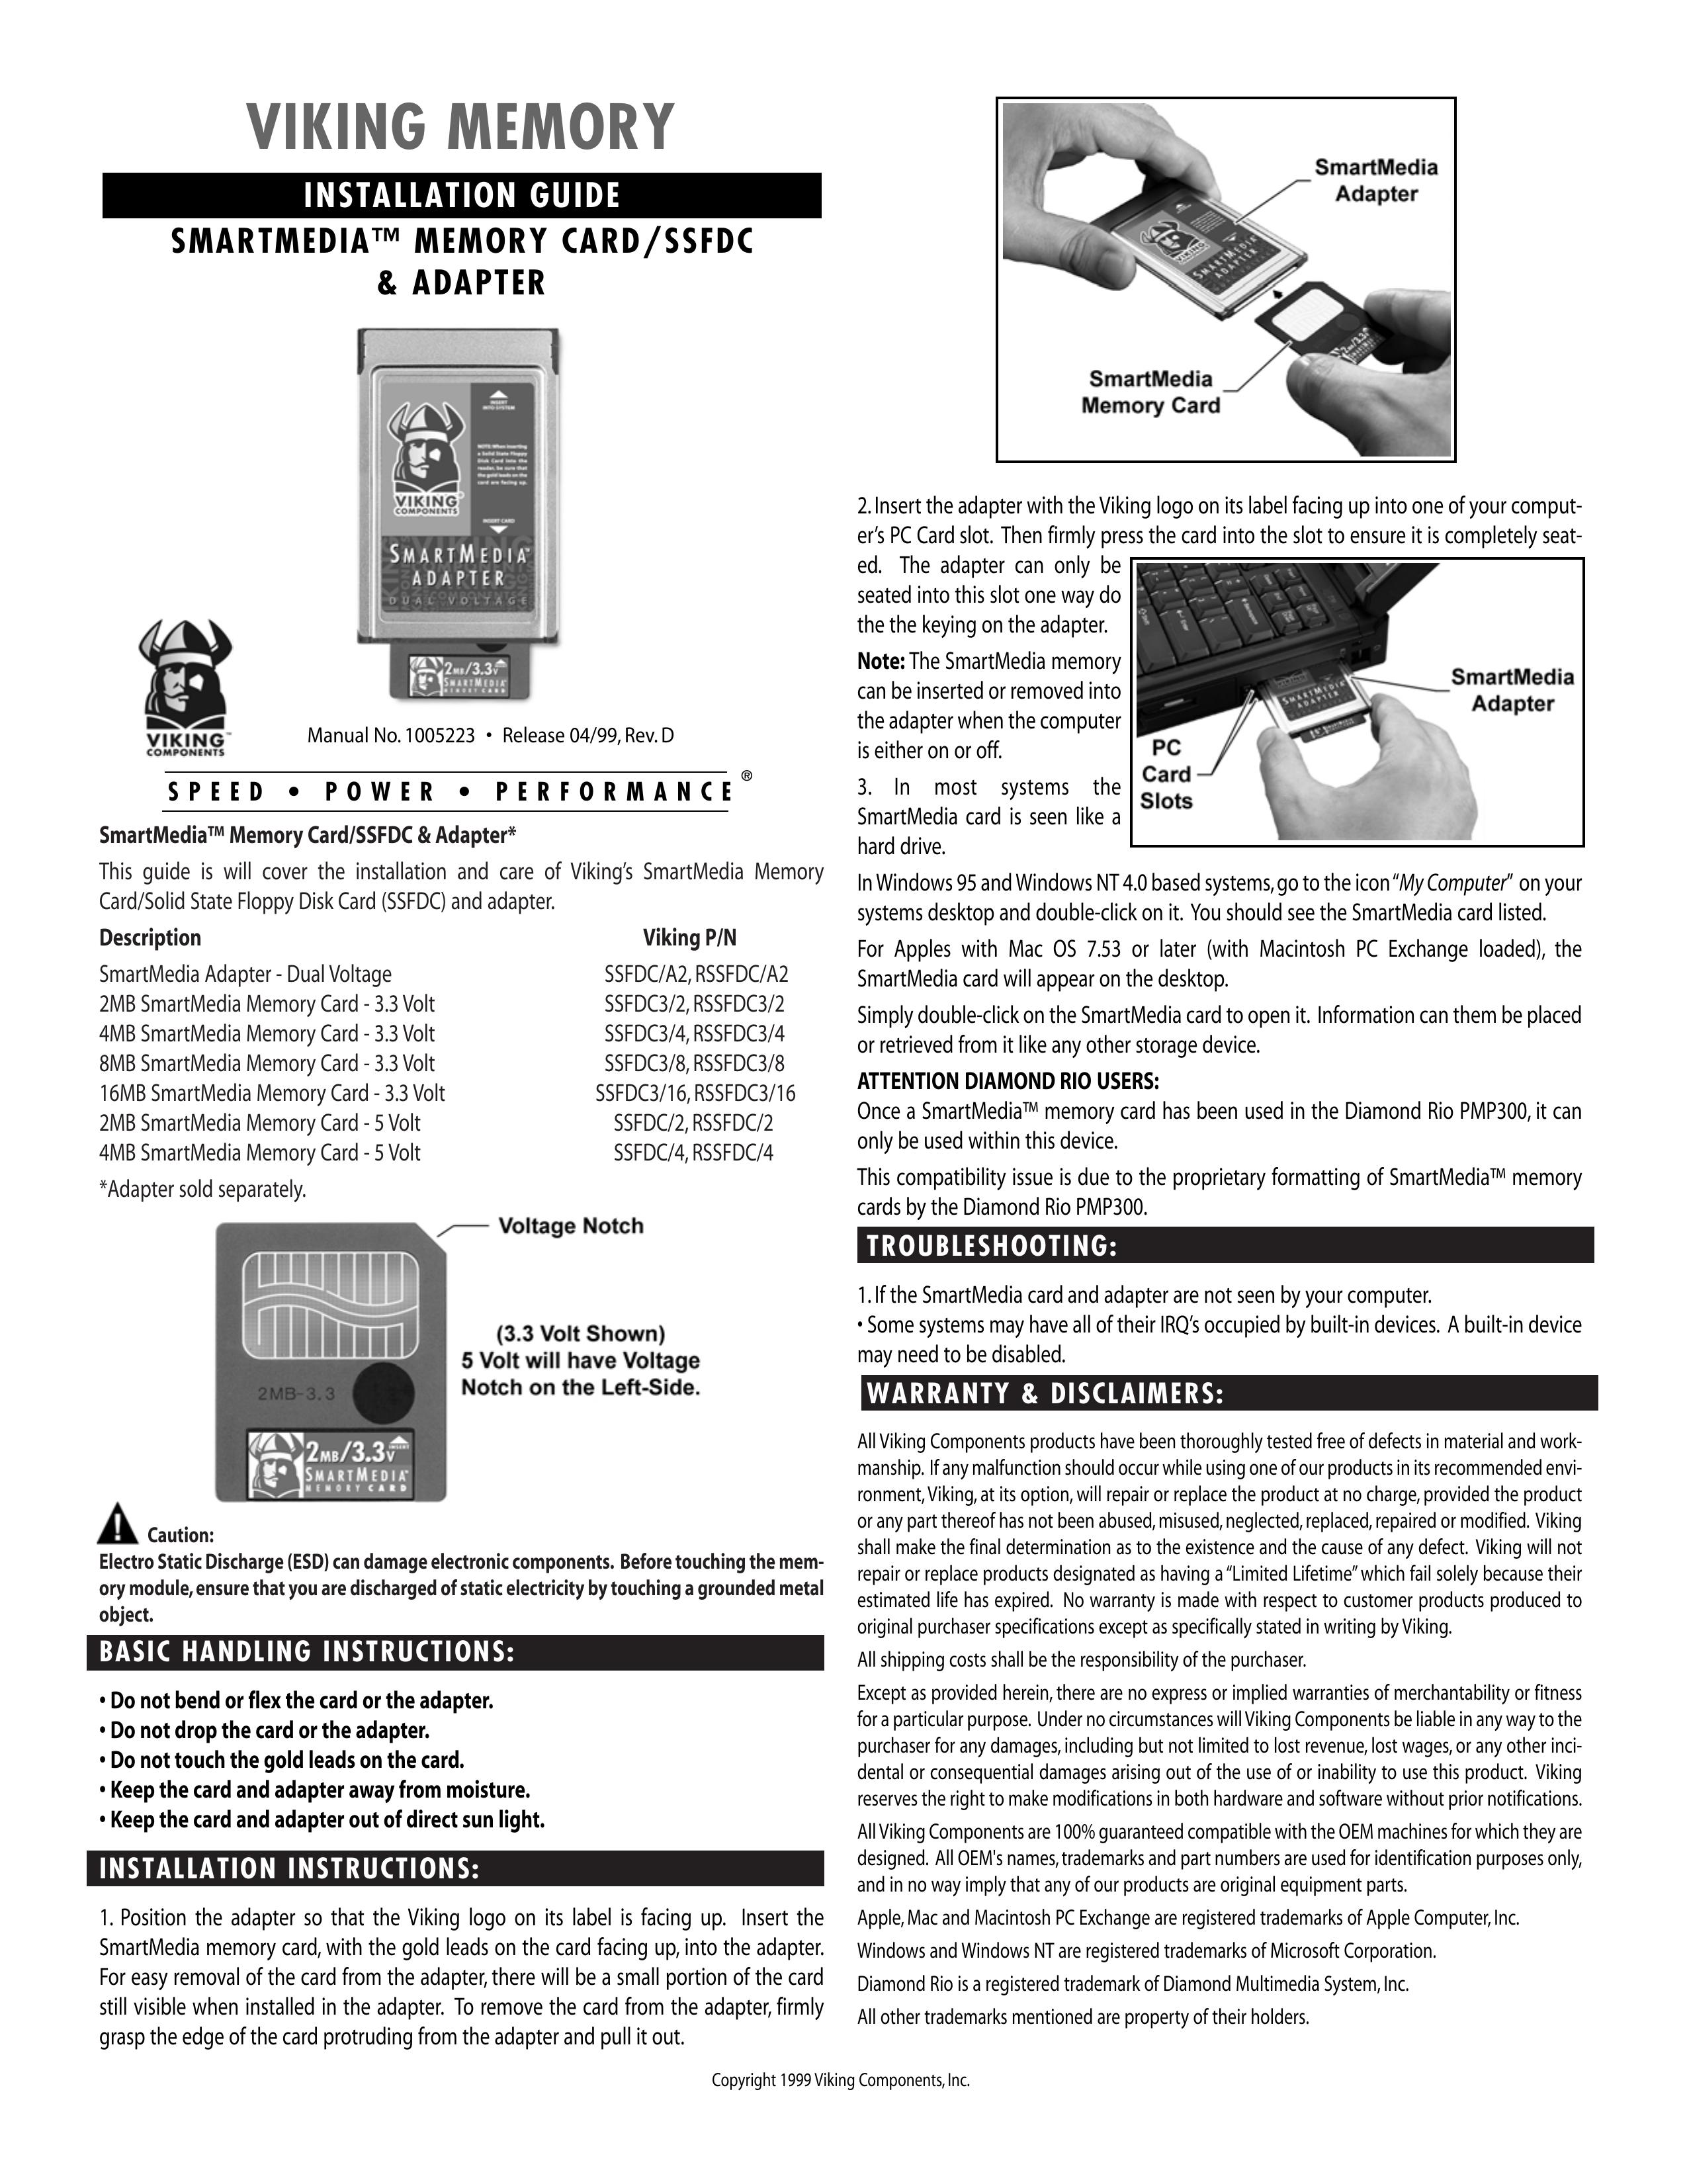 Viking SSFDC/A2 Camera Accessories User Manual